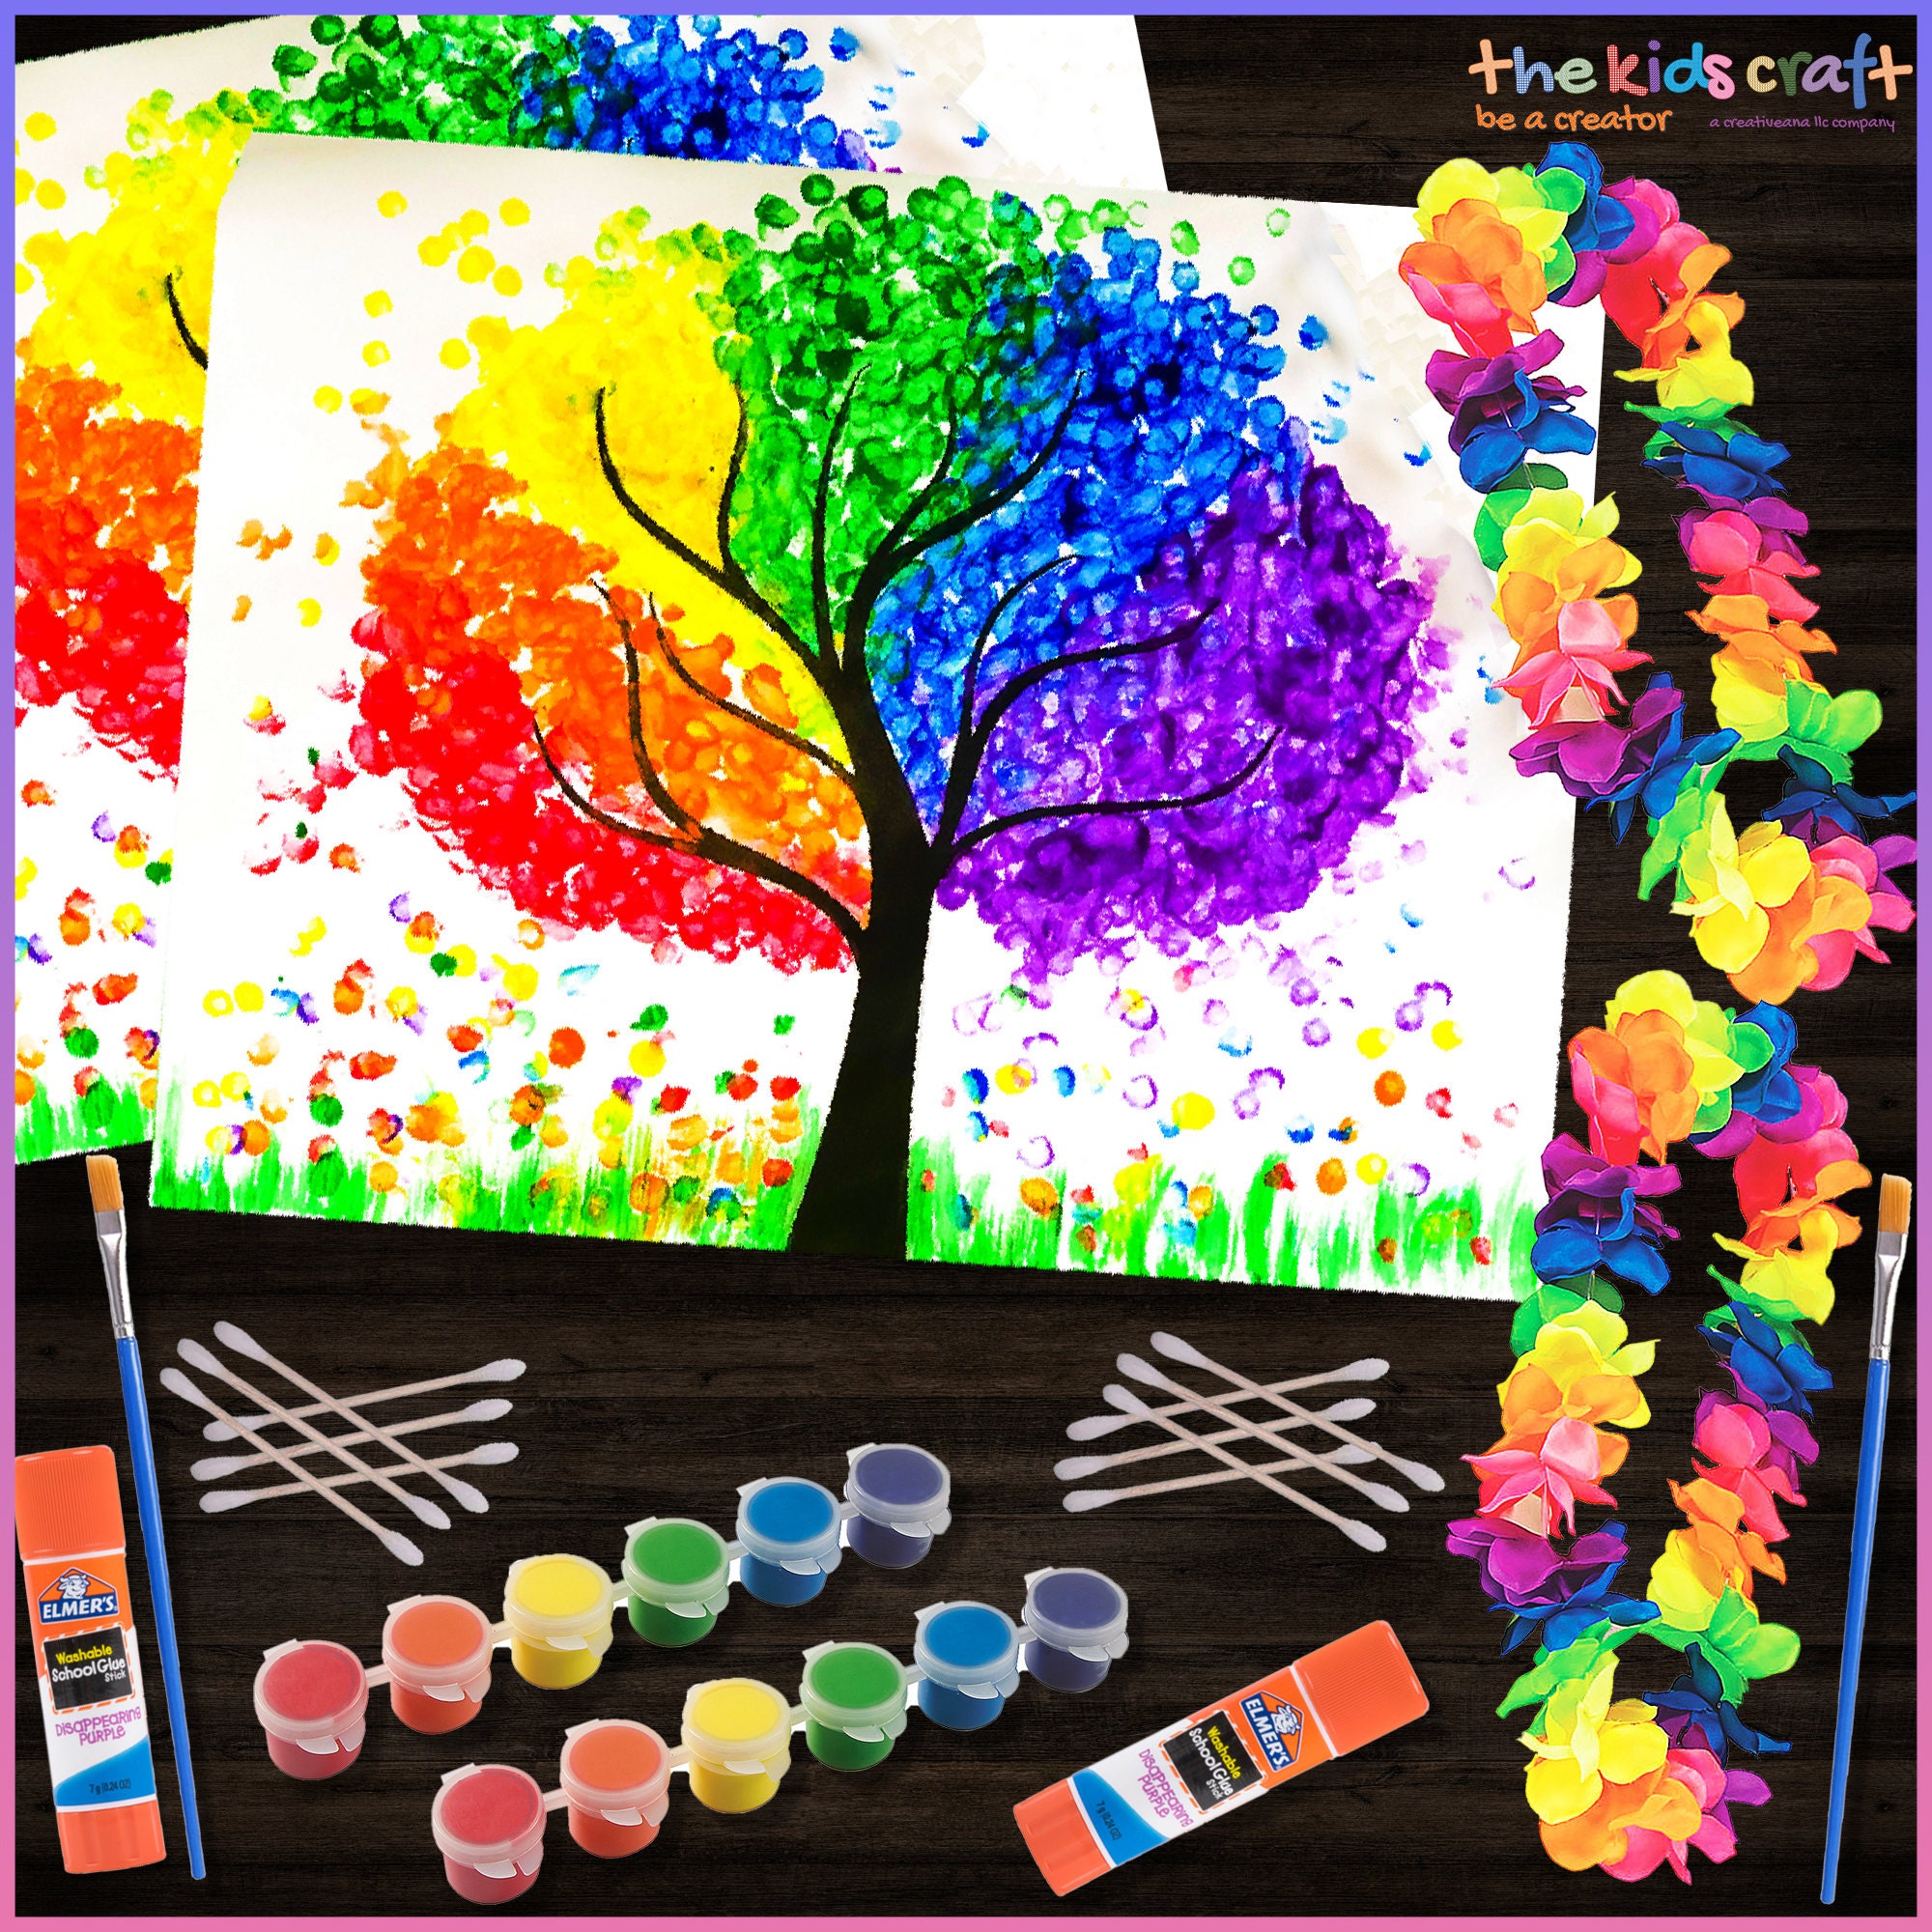 Rainbow DIY Crafts Box, Arts & Crafts Activity Box, Busy Kid, Gift for  Girls, Boys, Holiday, Birthday Gifts, Rainbow Fun 